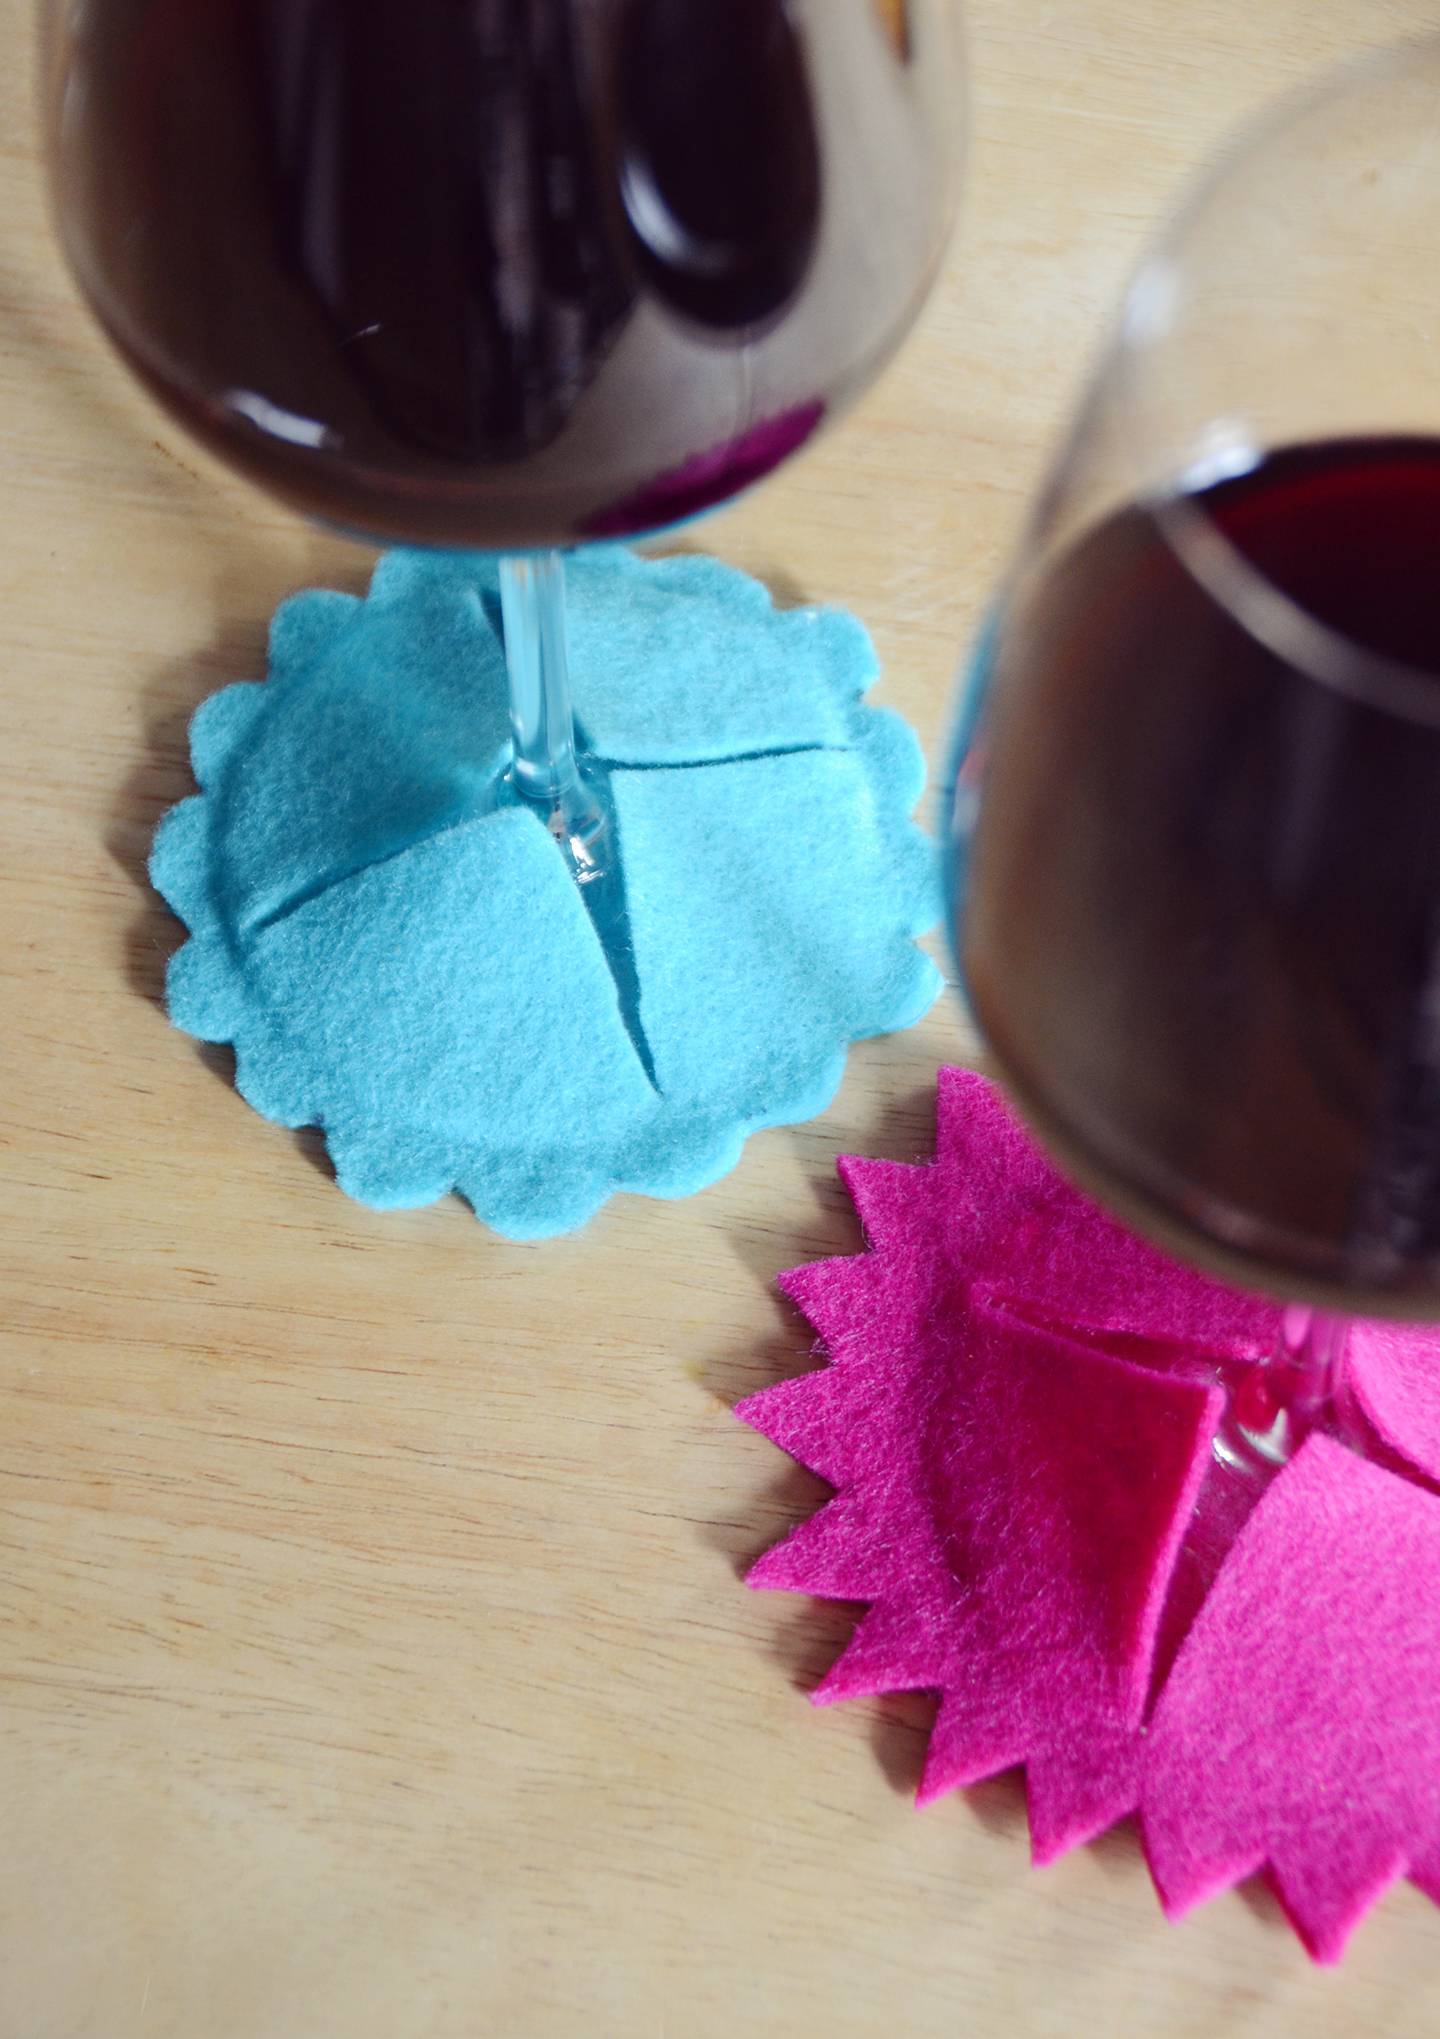 DIY No-Sew Felt Wine Glass Coasters